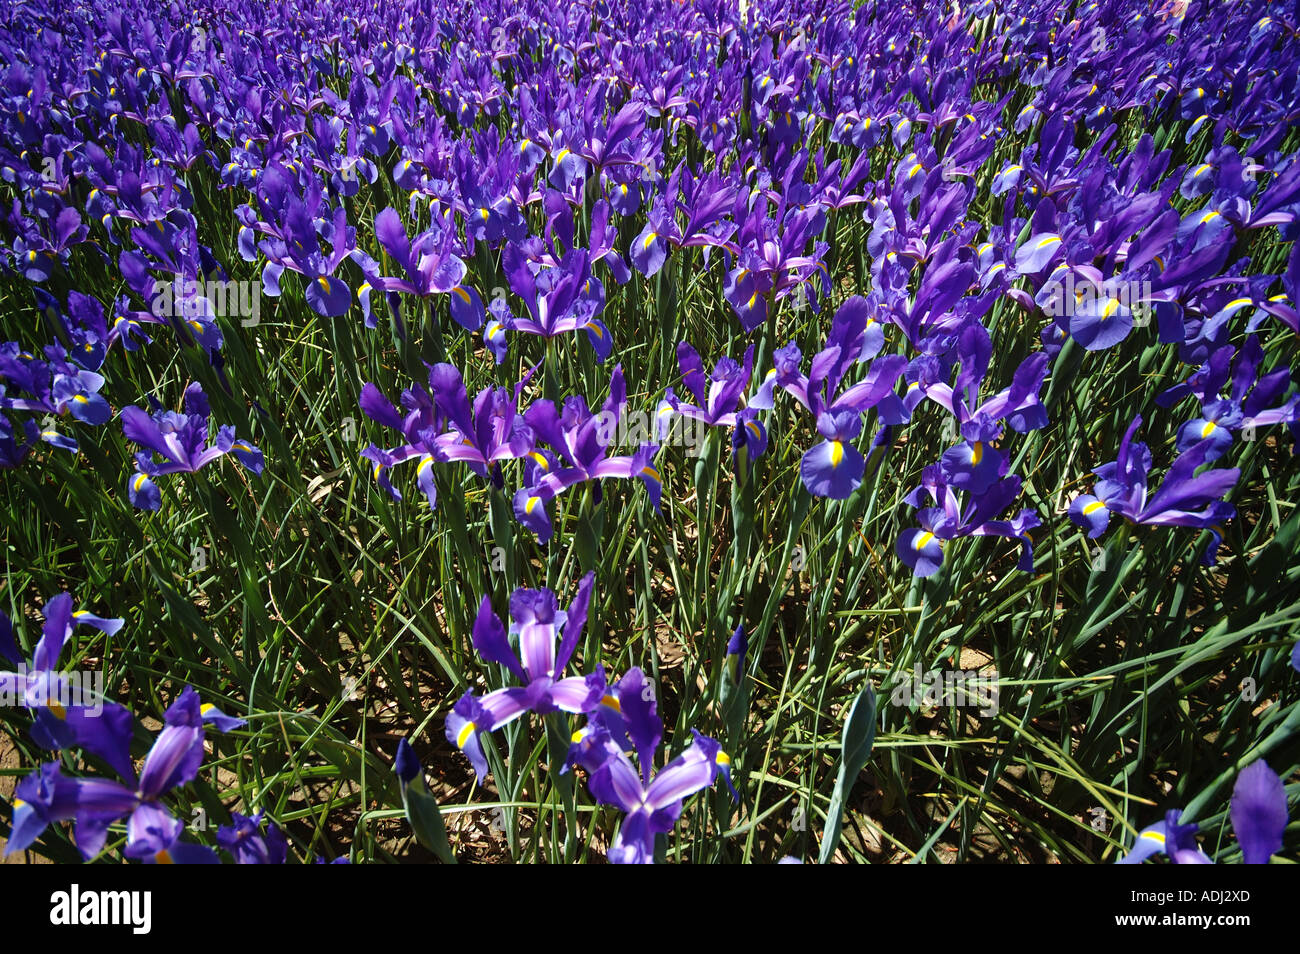 Iris prismatica in display garden  a perennial herbs, growing from creeping rhizomes Stock Photo